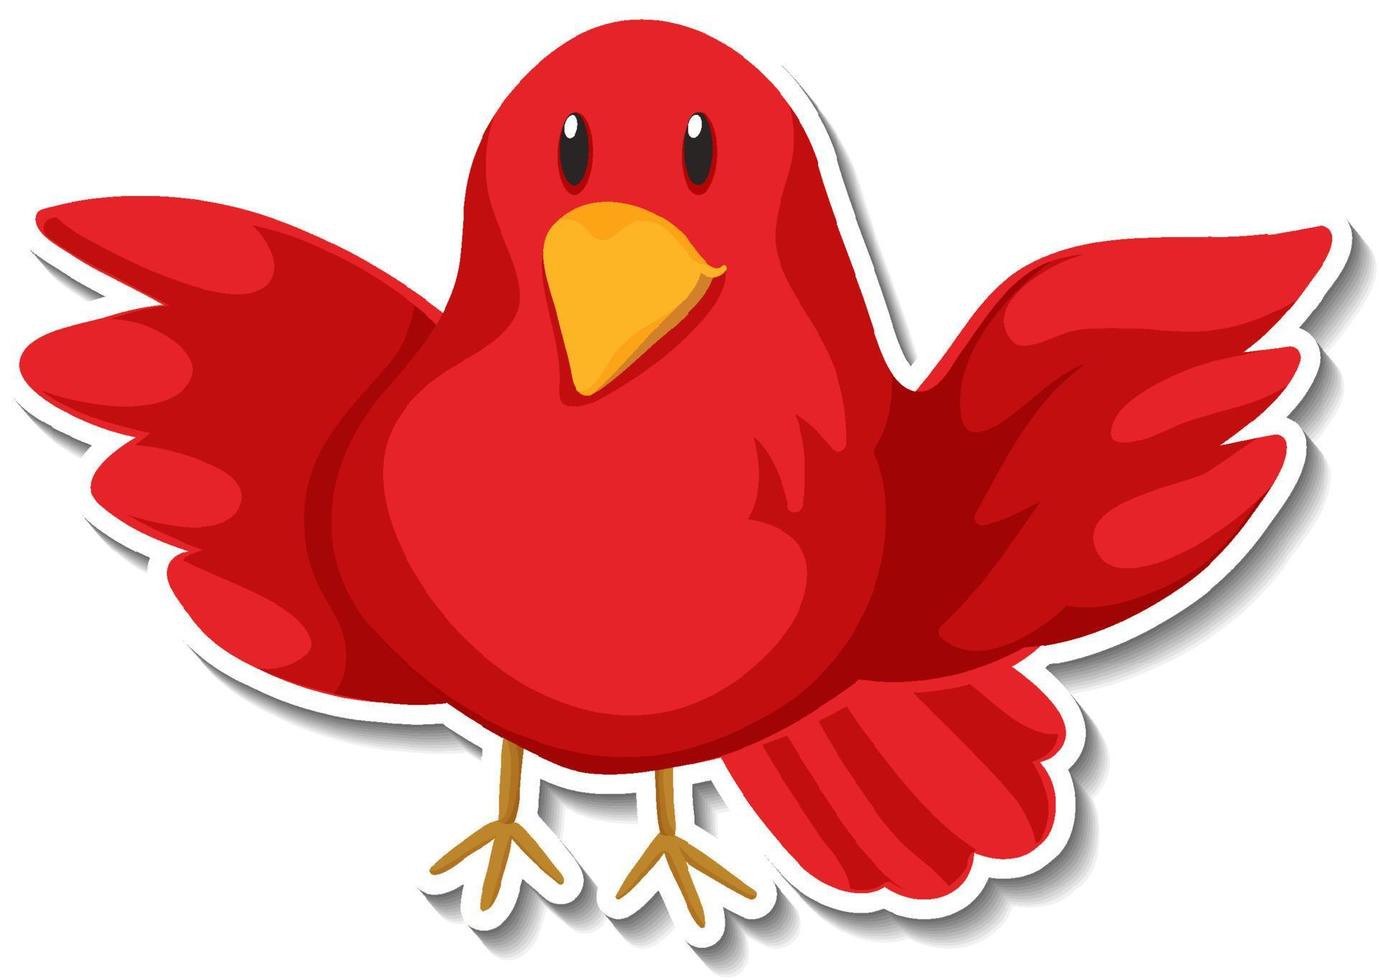 Little red bird animal cartoon sticker vector